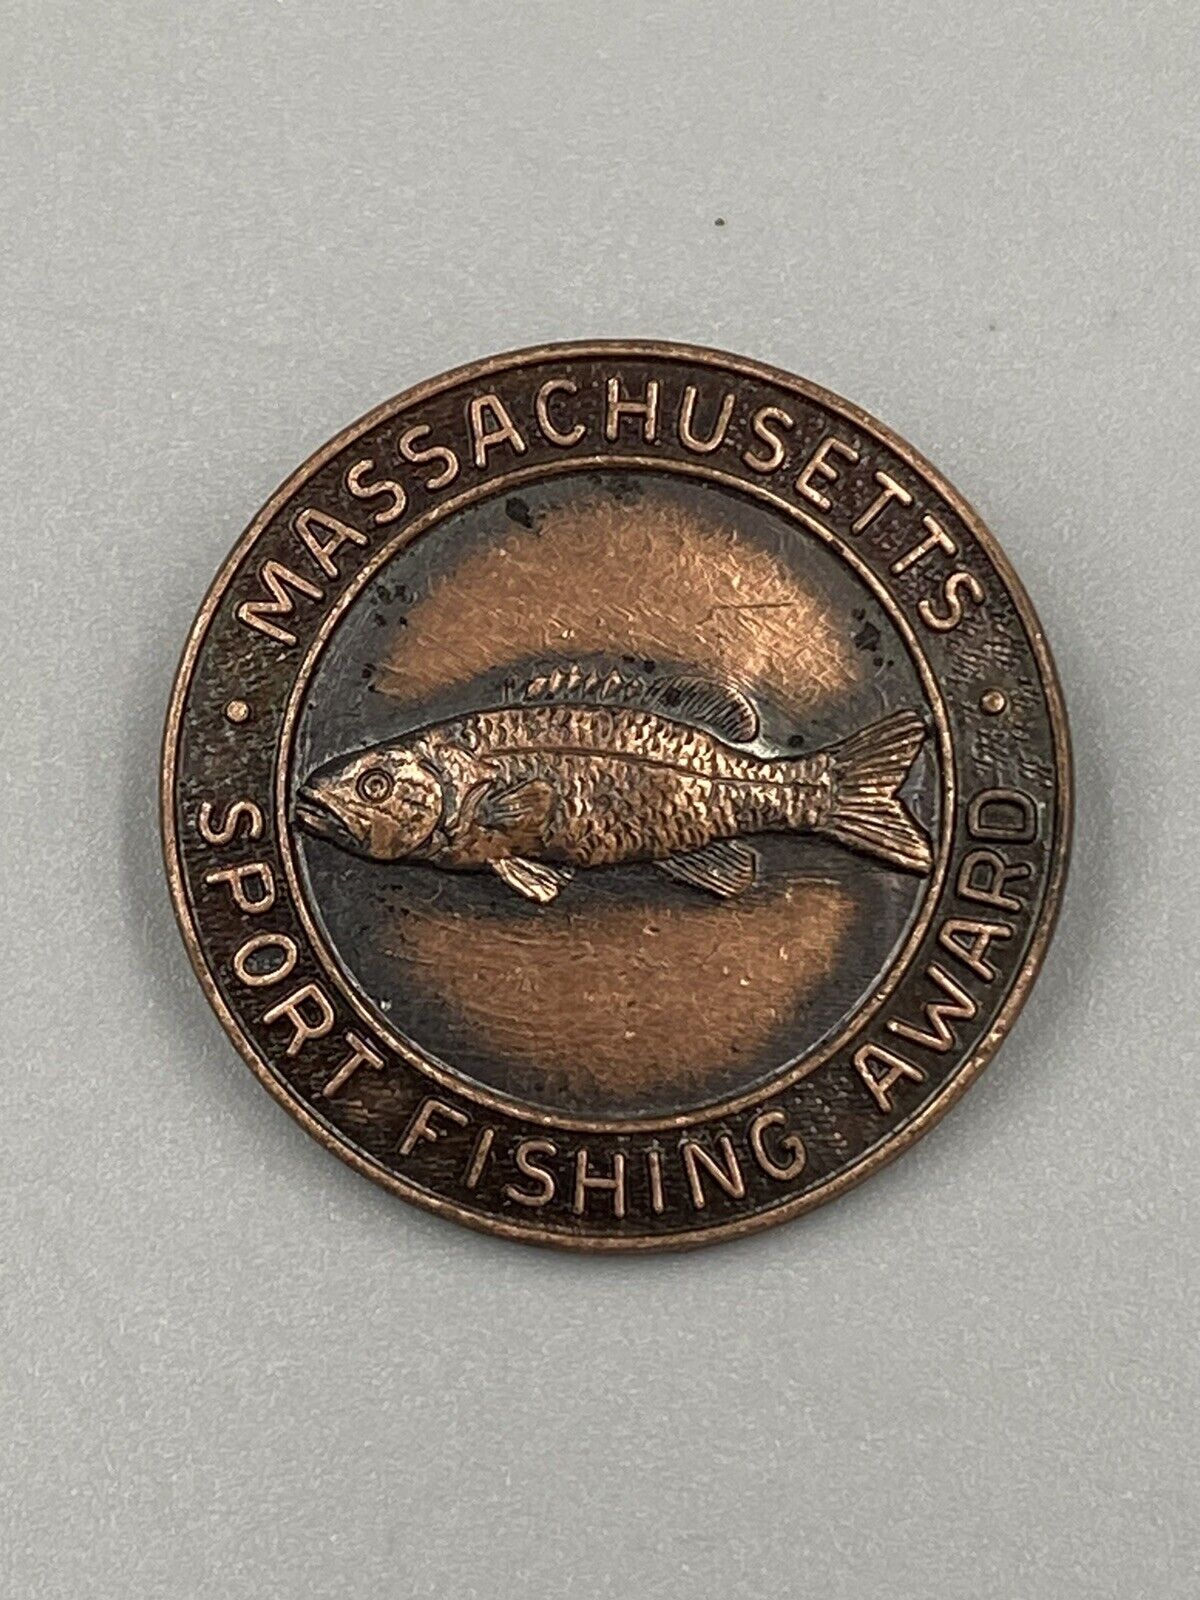 VINTAGE 1970 SPORTS FISHING AWARD ASSOCIATION MASSACHUSETTS 3 LBS 12 OZ